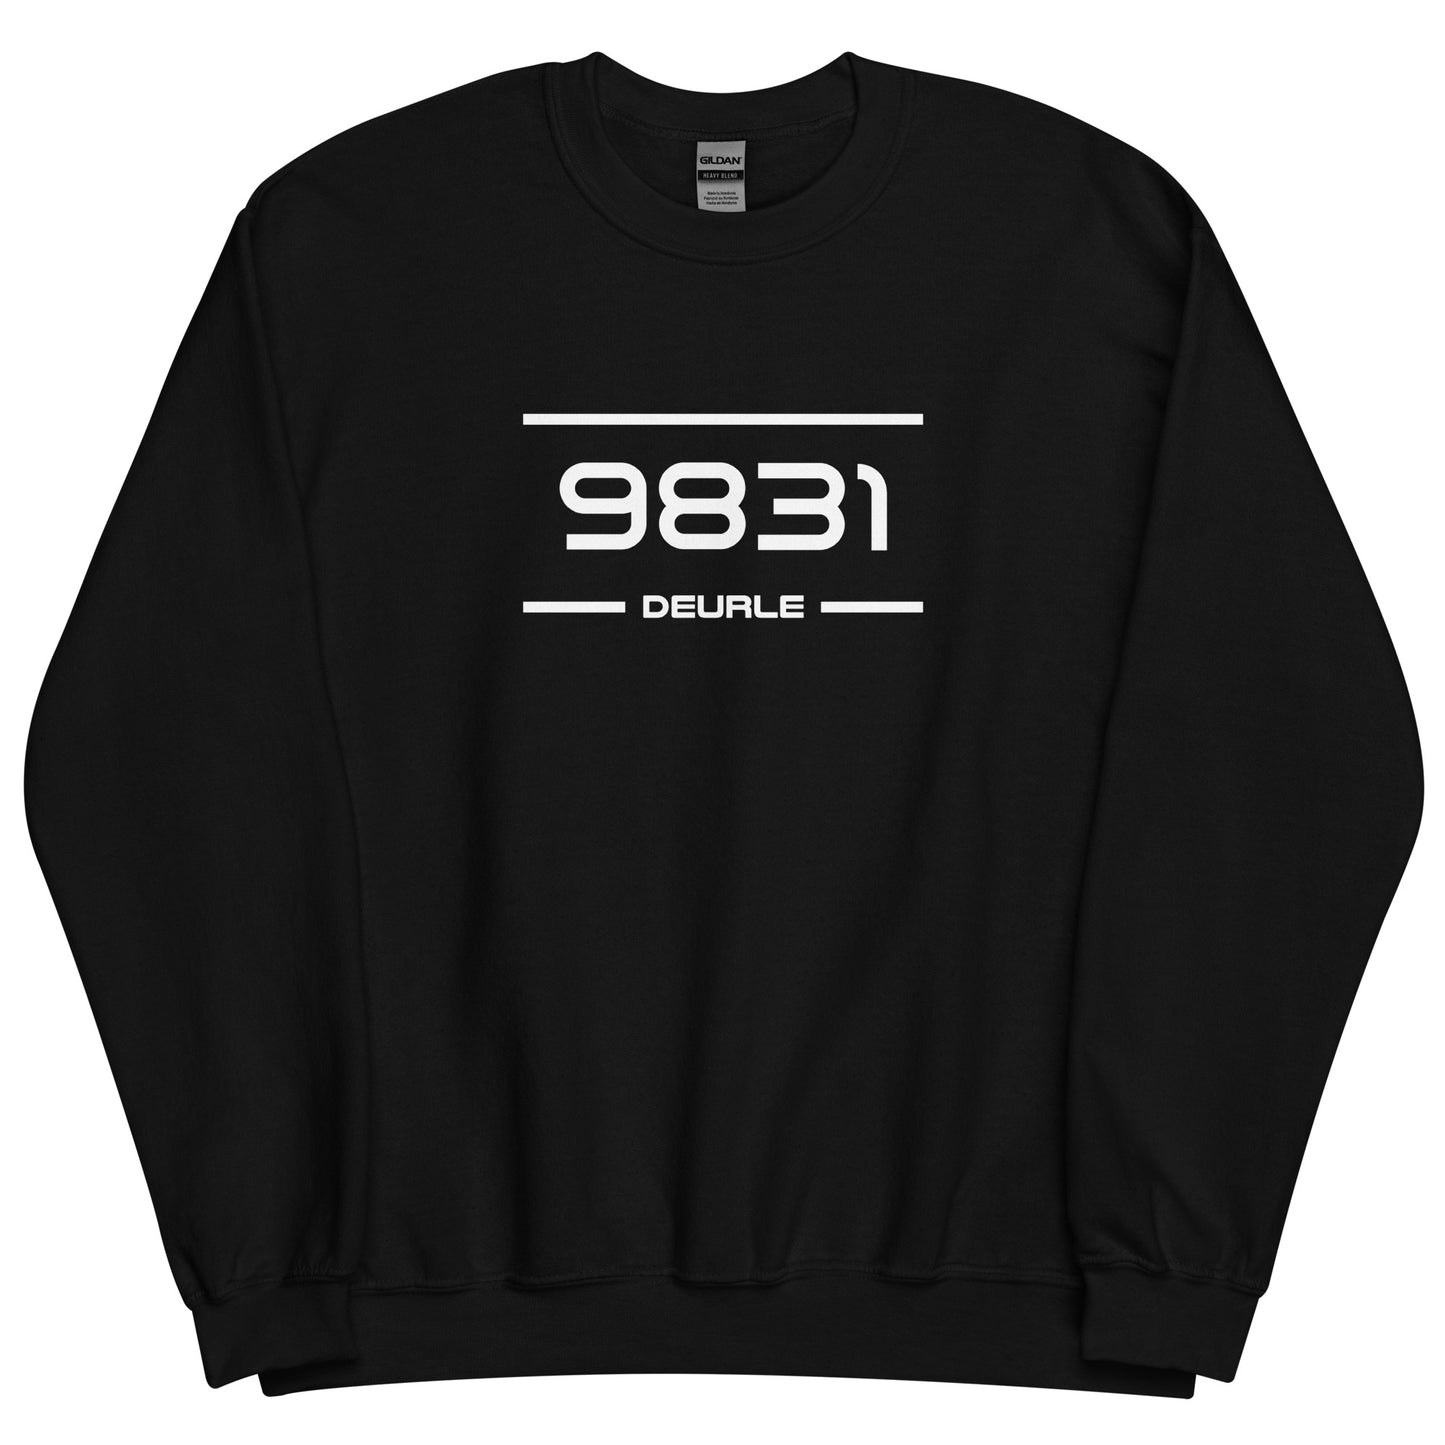 Sweater - 9831 - Deurle (M/V)